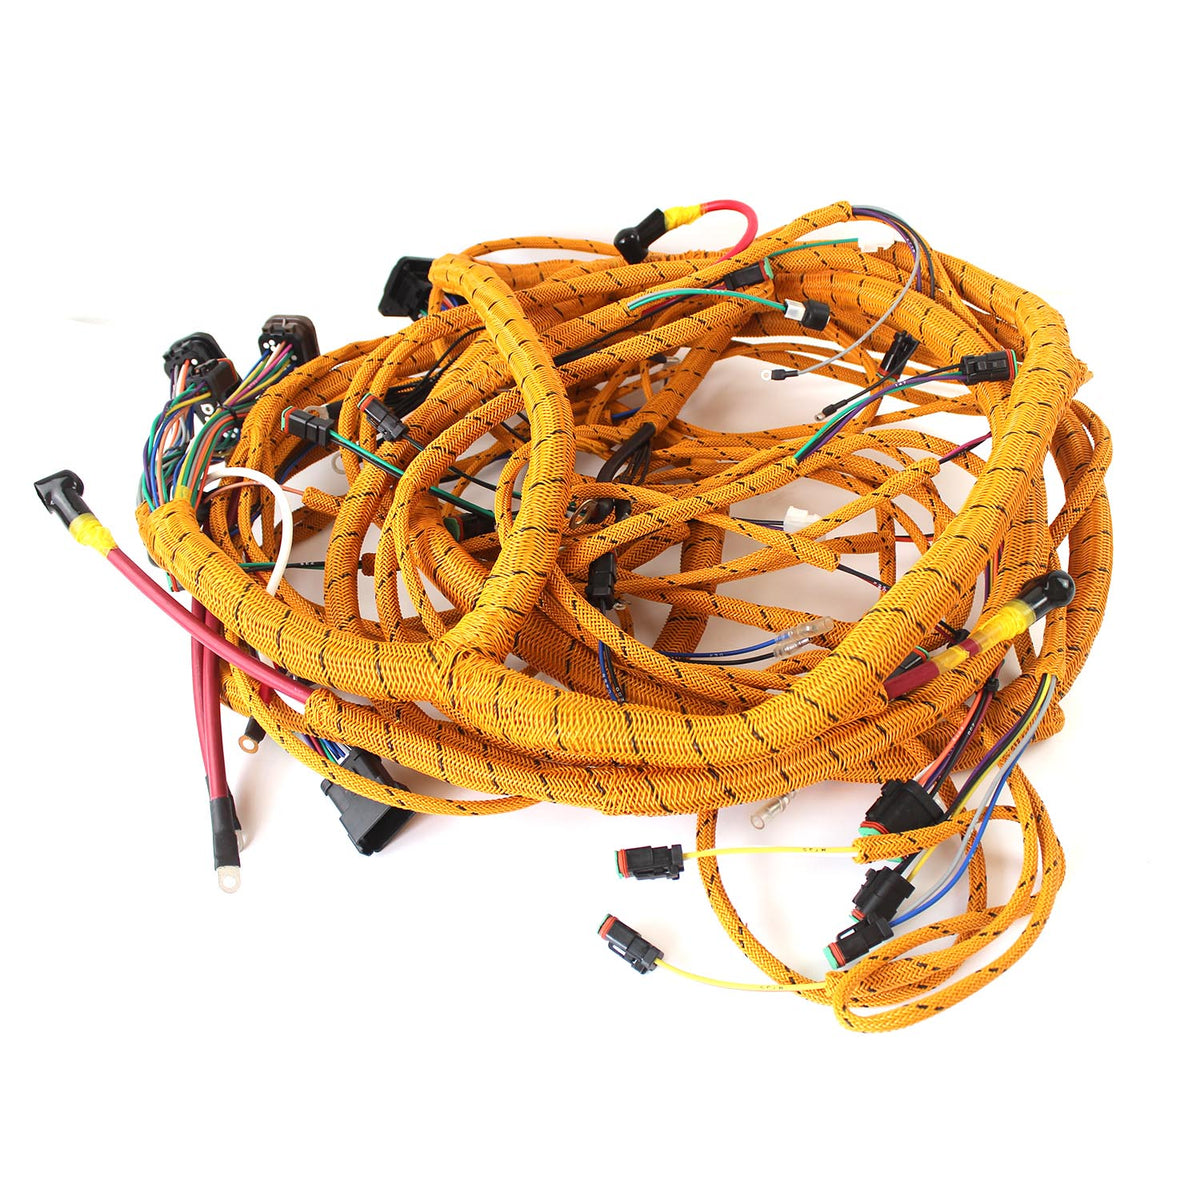 External Wire Harness for Caterpillar 320C Excavator